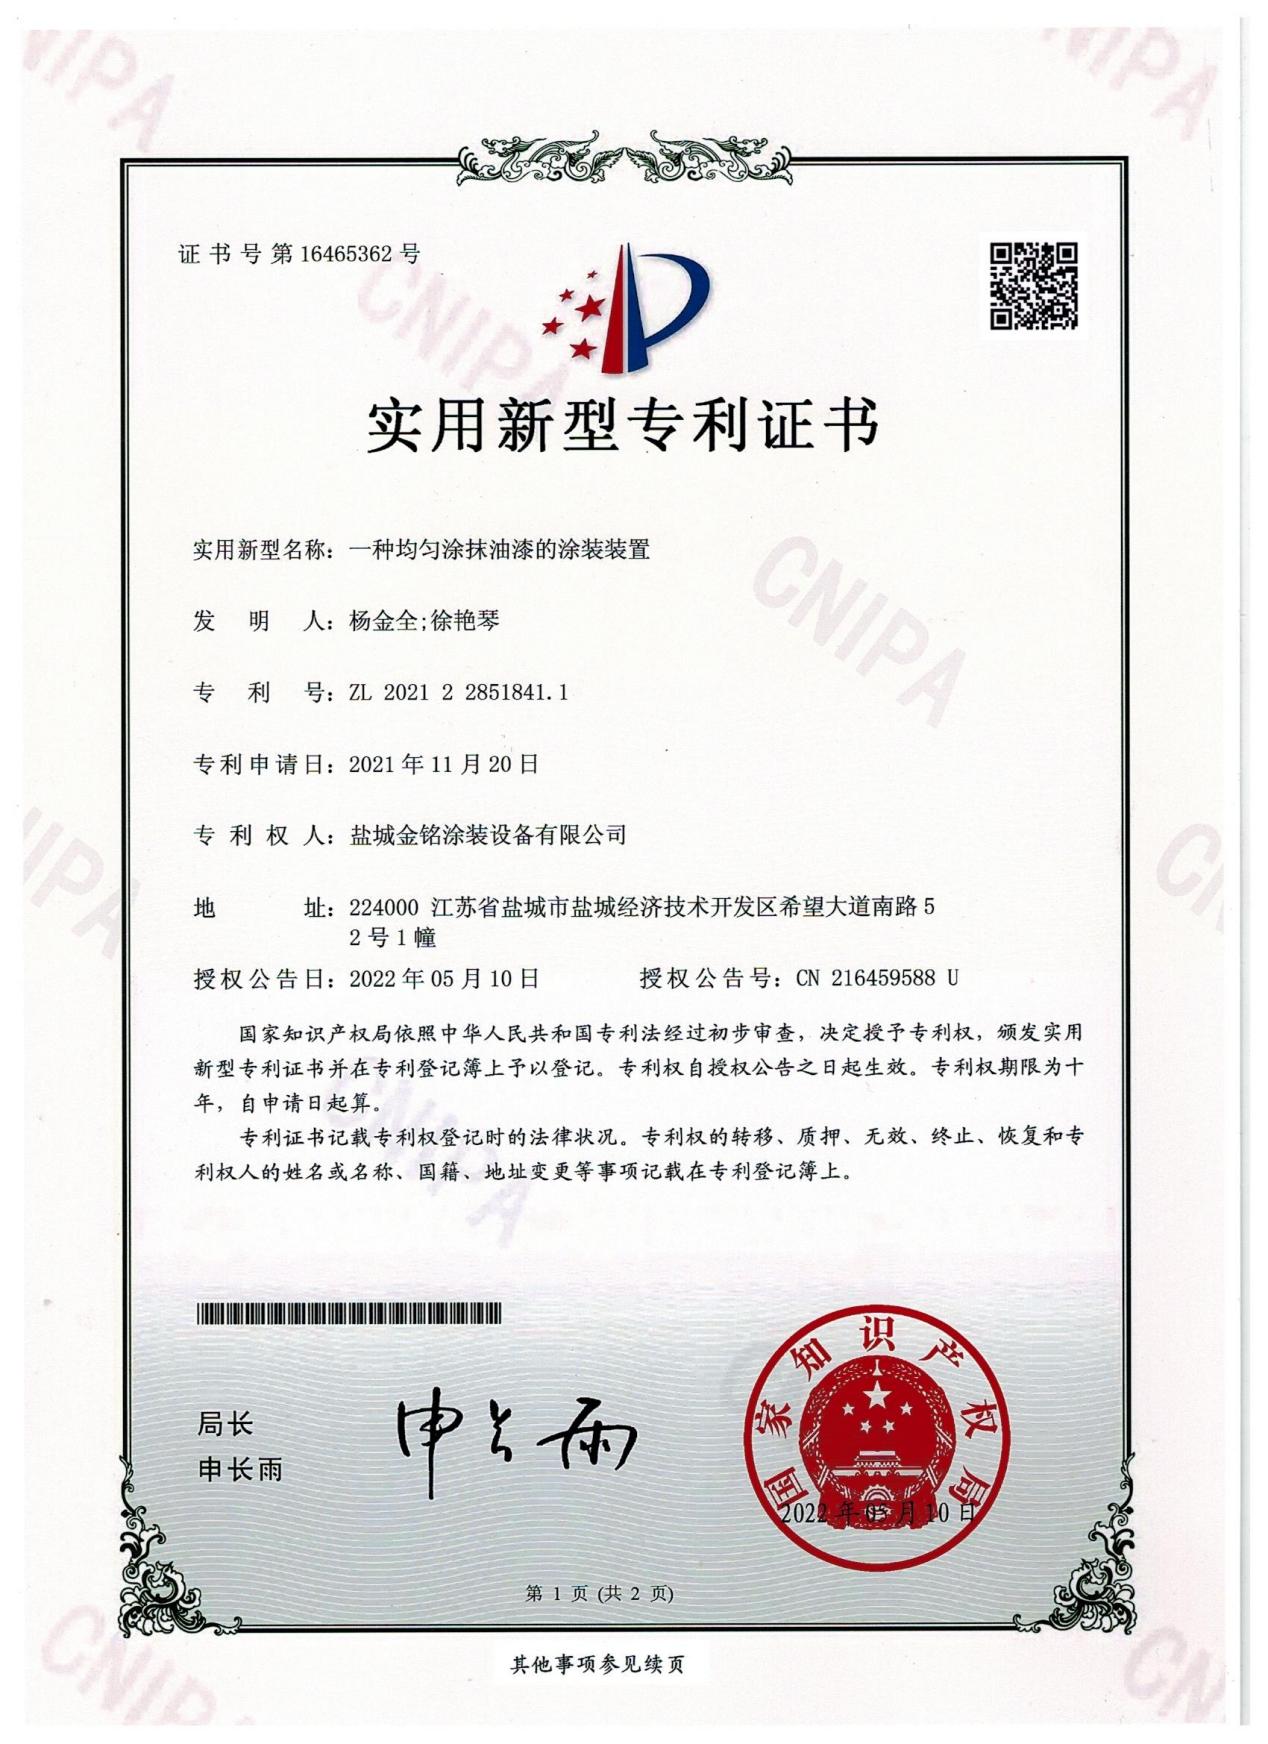 Company patent technology certificate